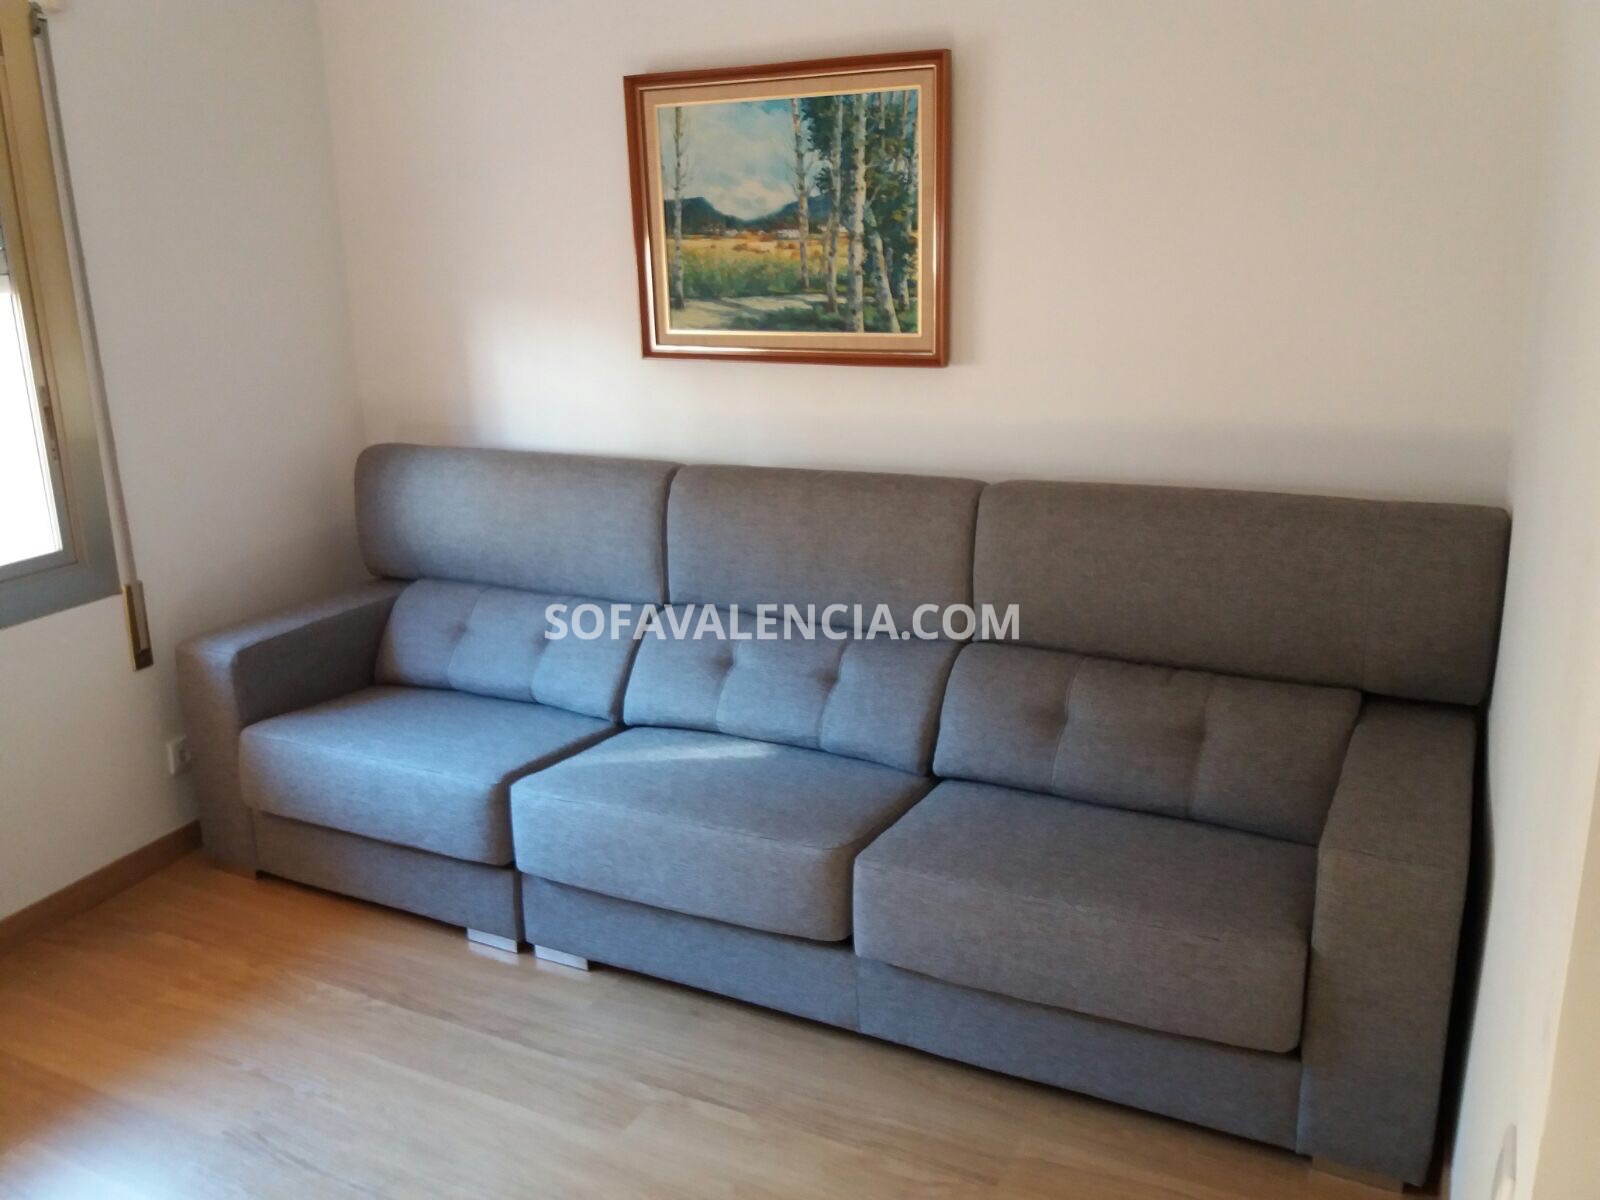 sofa-valencia-fotos-clientes-6